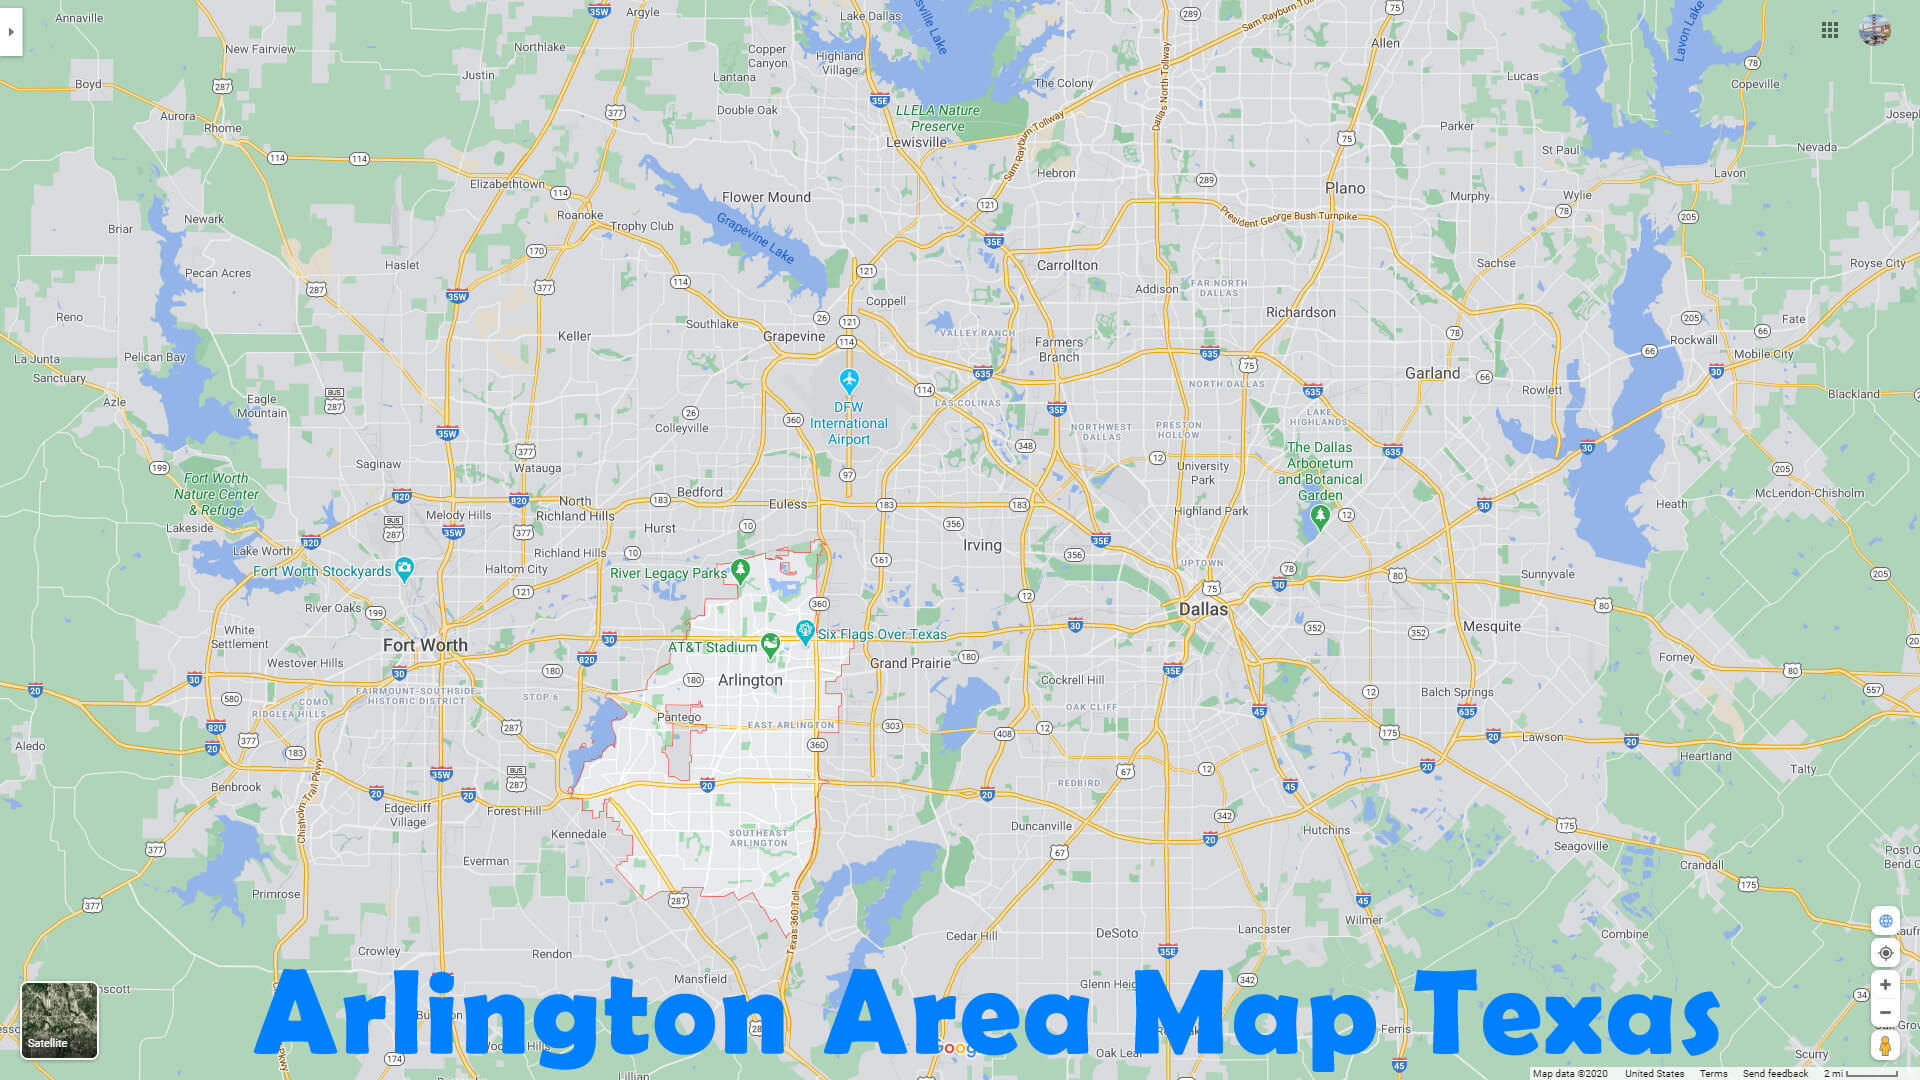 Arlington Area Map Texas